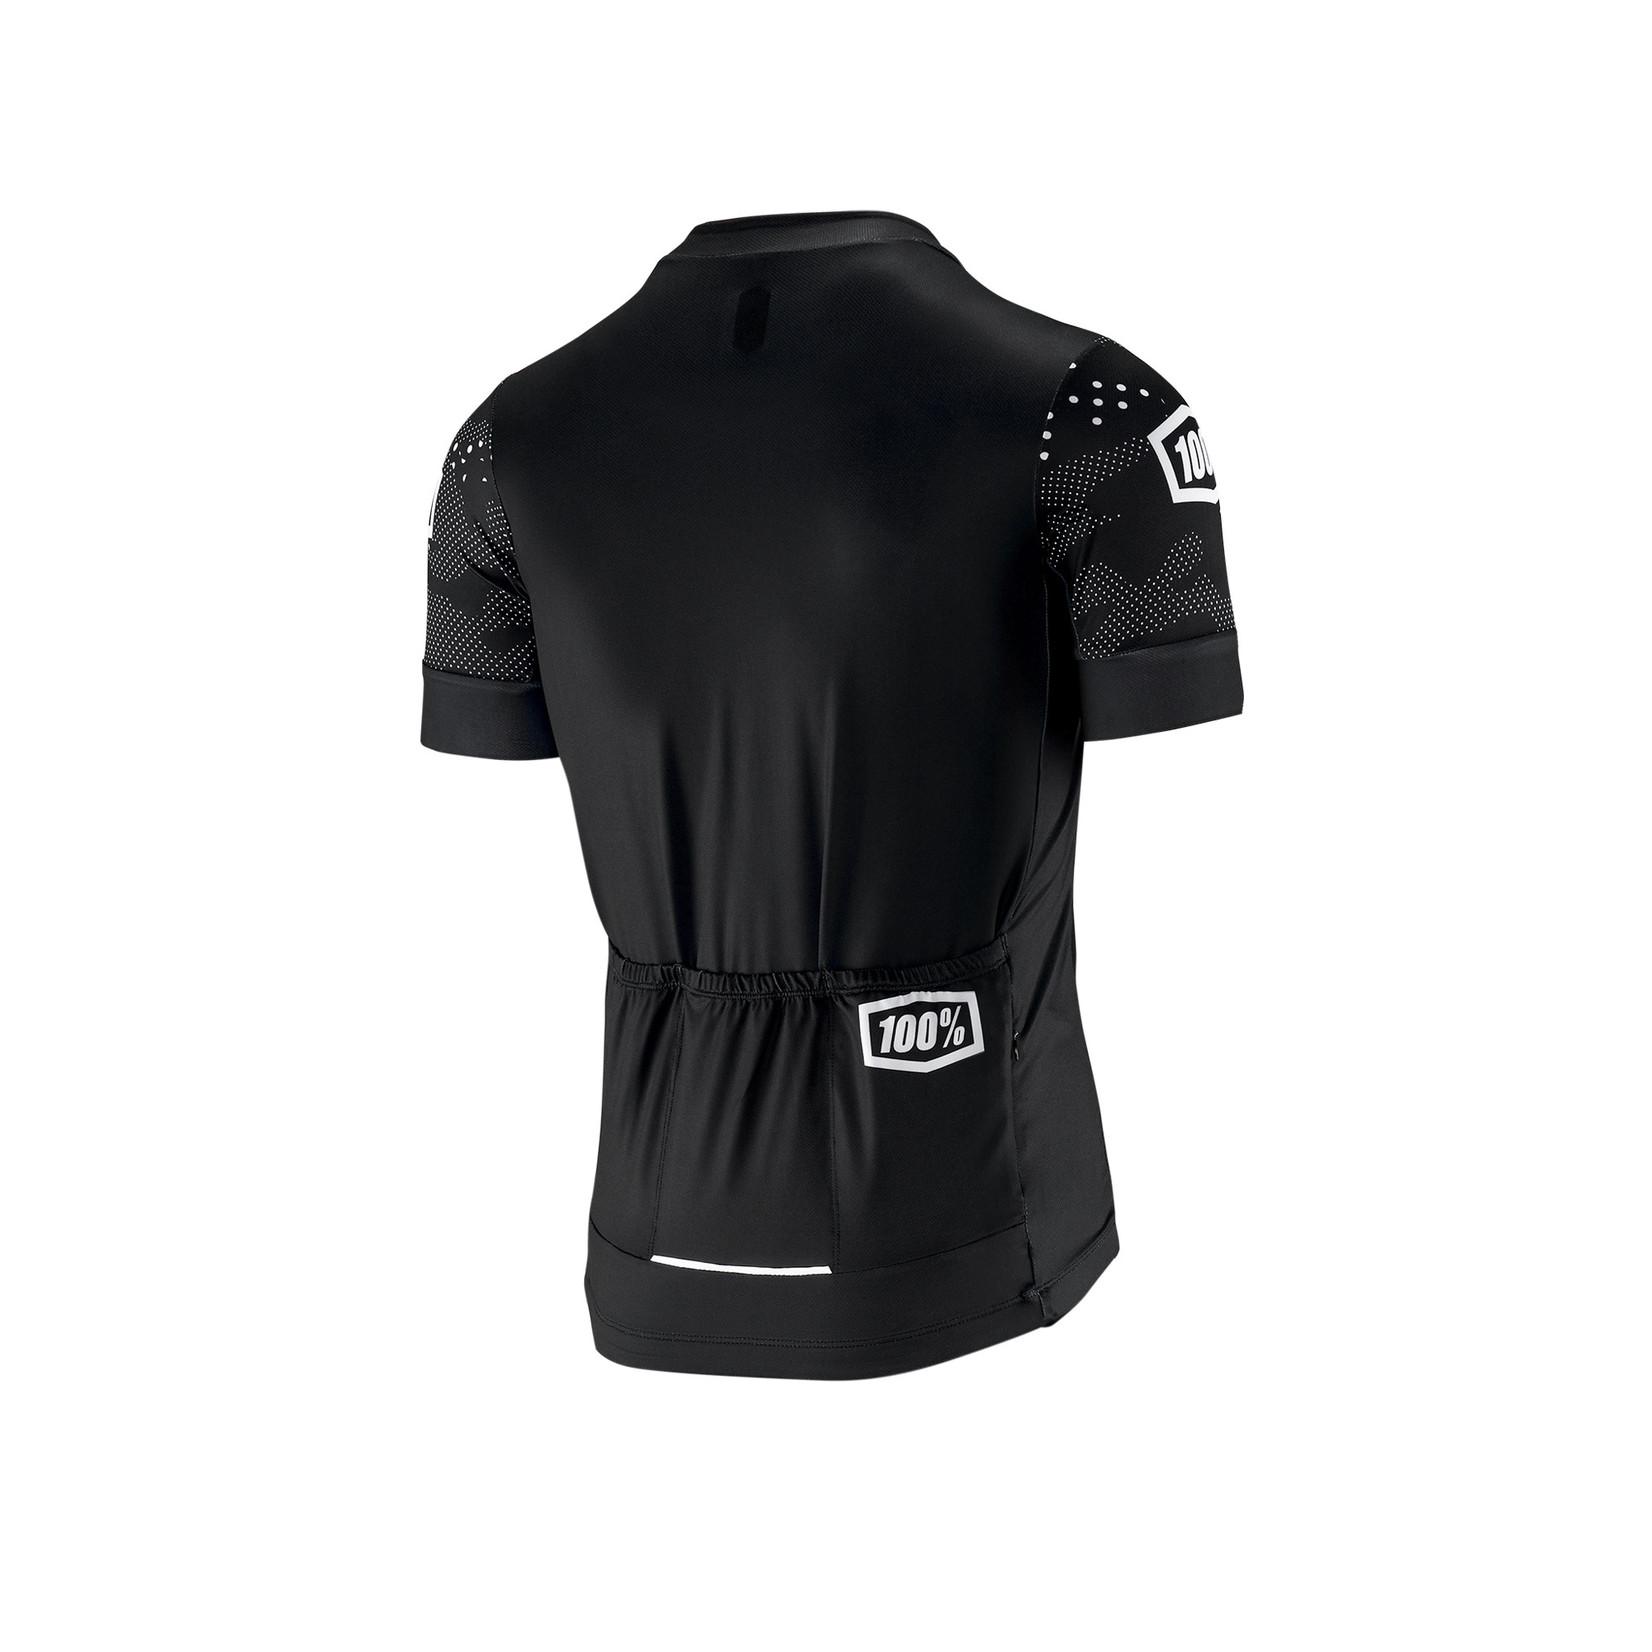 100% Exceeda Nylon/Spandex/Silicone Bike Gear Jersey - Black